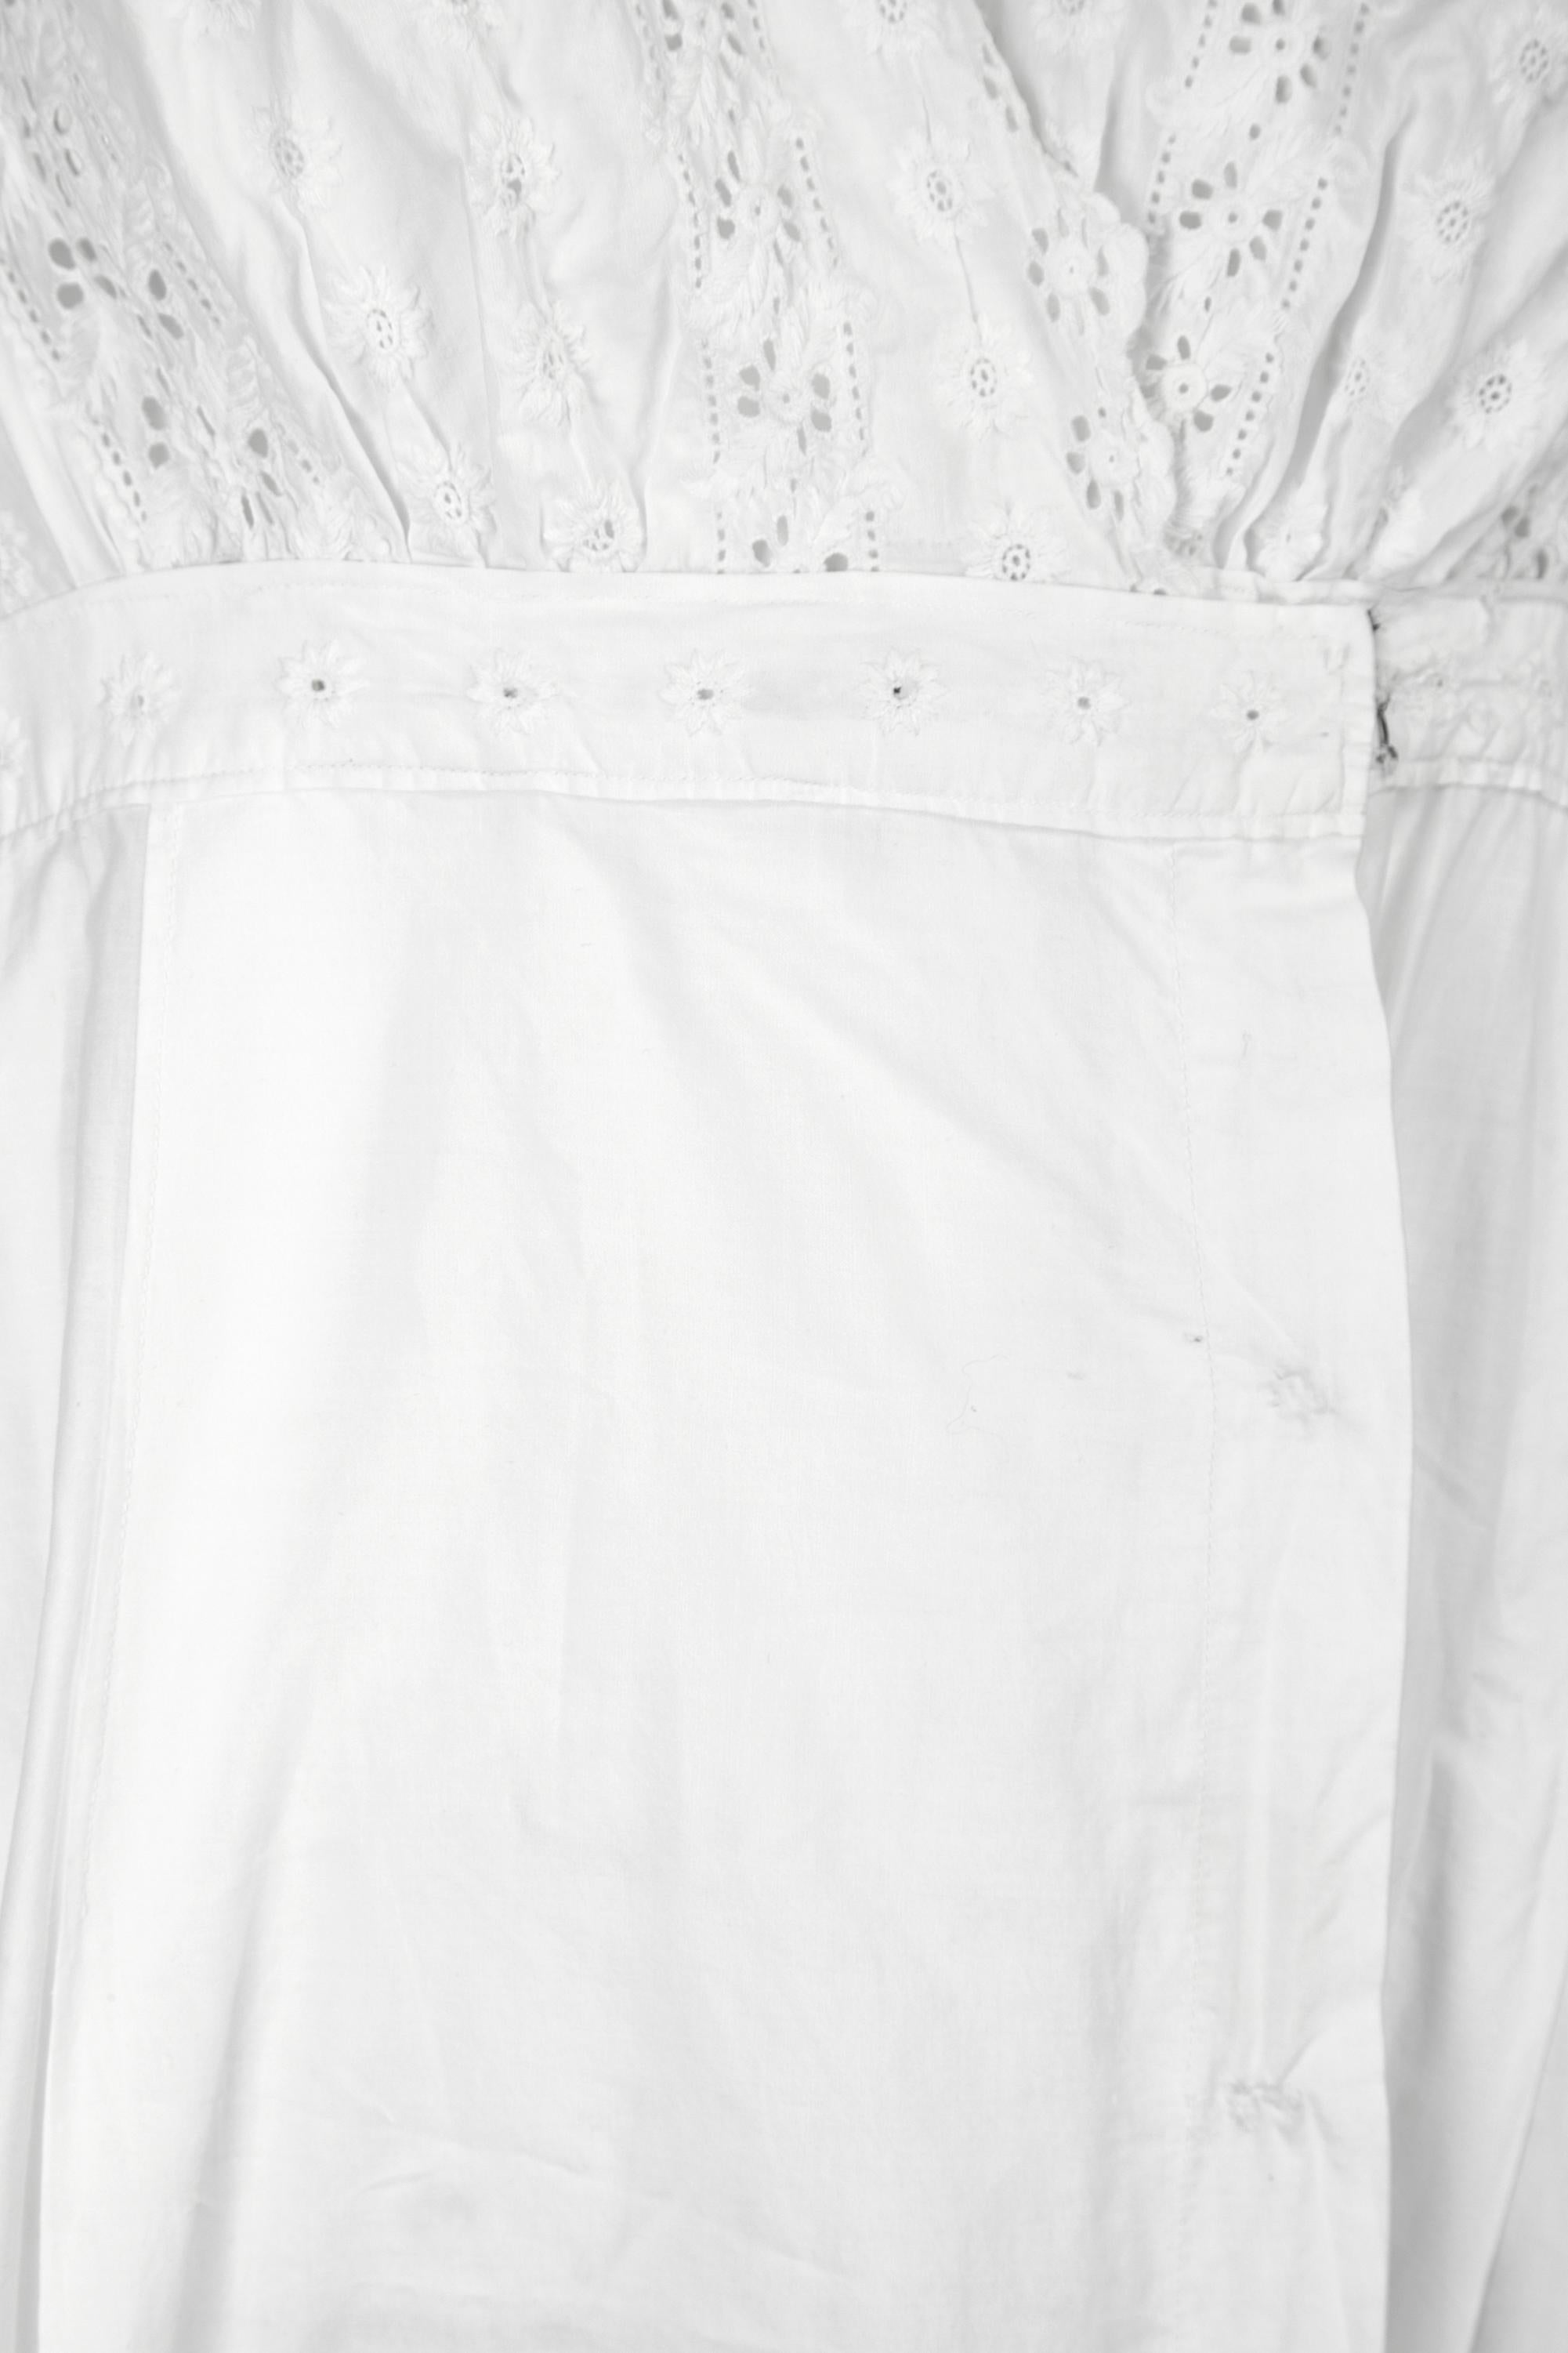 Women's 1910s Edwardian White Eyelet Work Wrap Dress For Sale